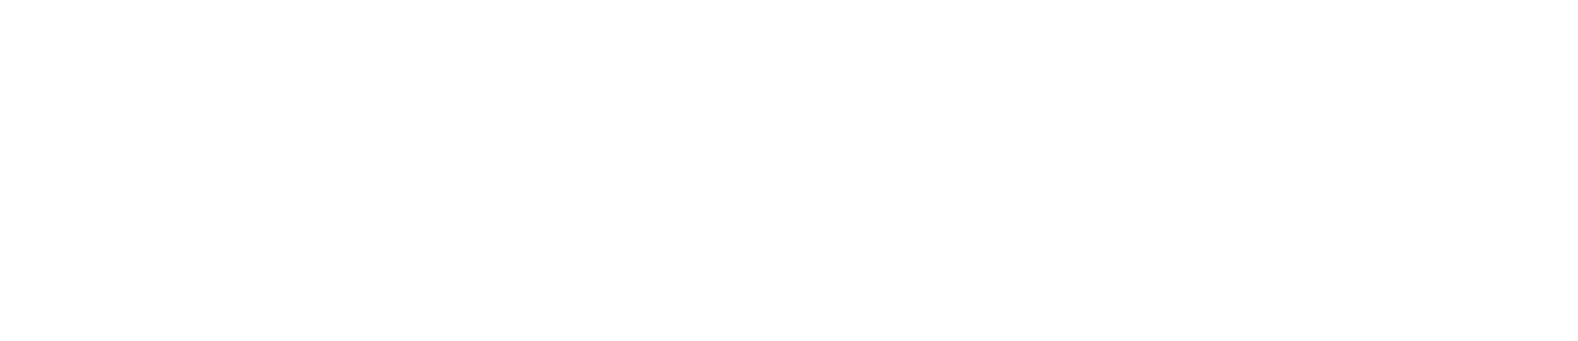 Caleres Logo groß für dunkle Hintergründe (transparentes PNG)